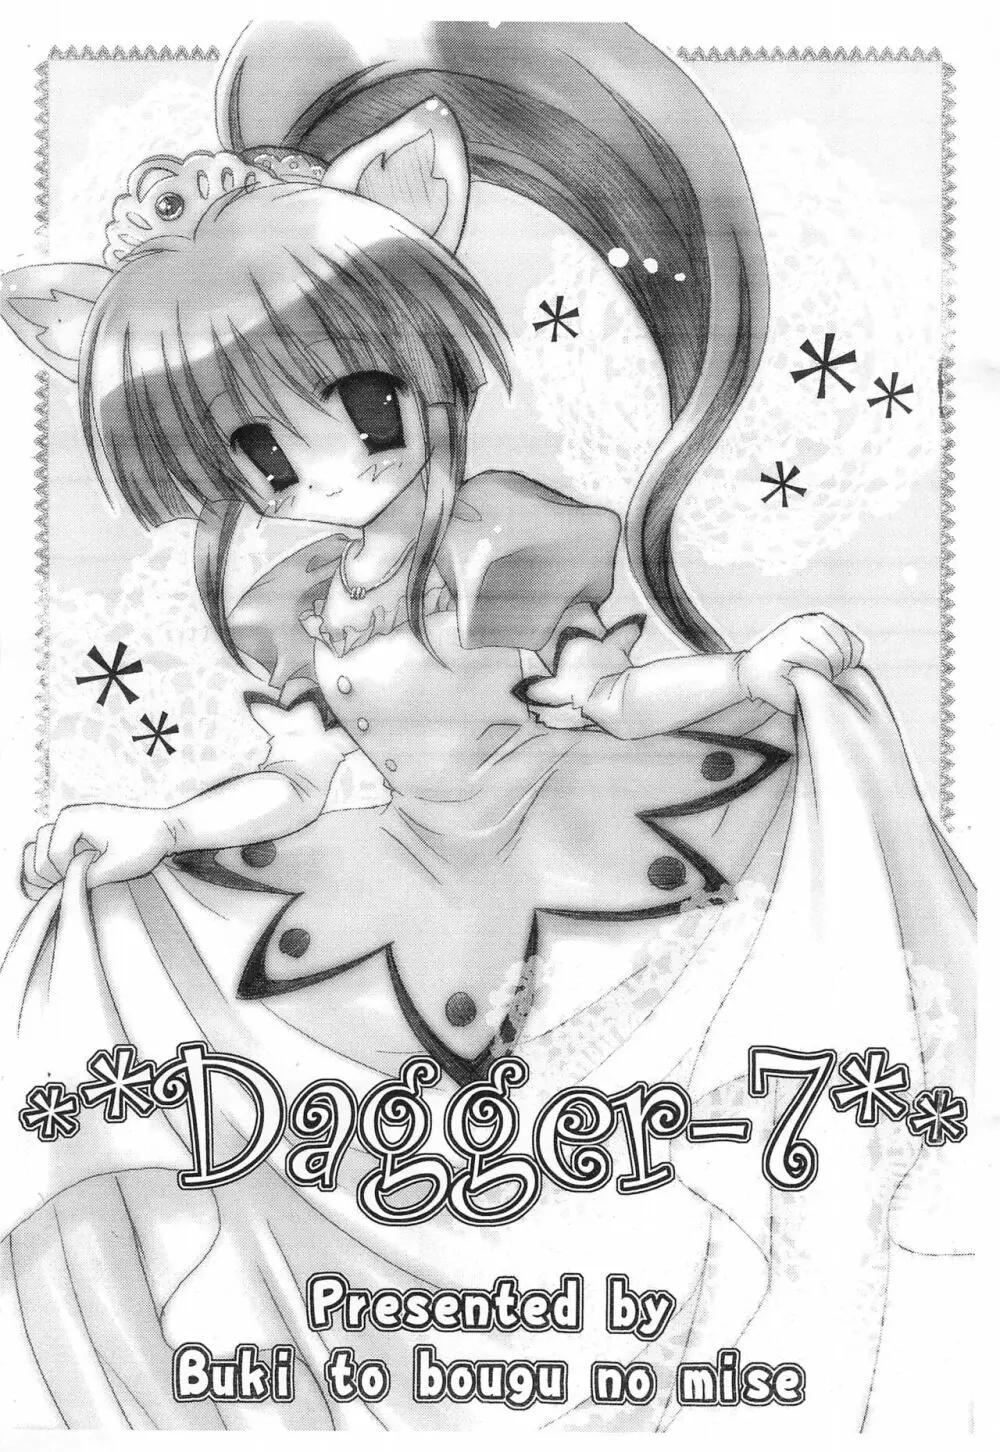 Dagger‐7